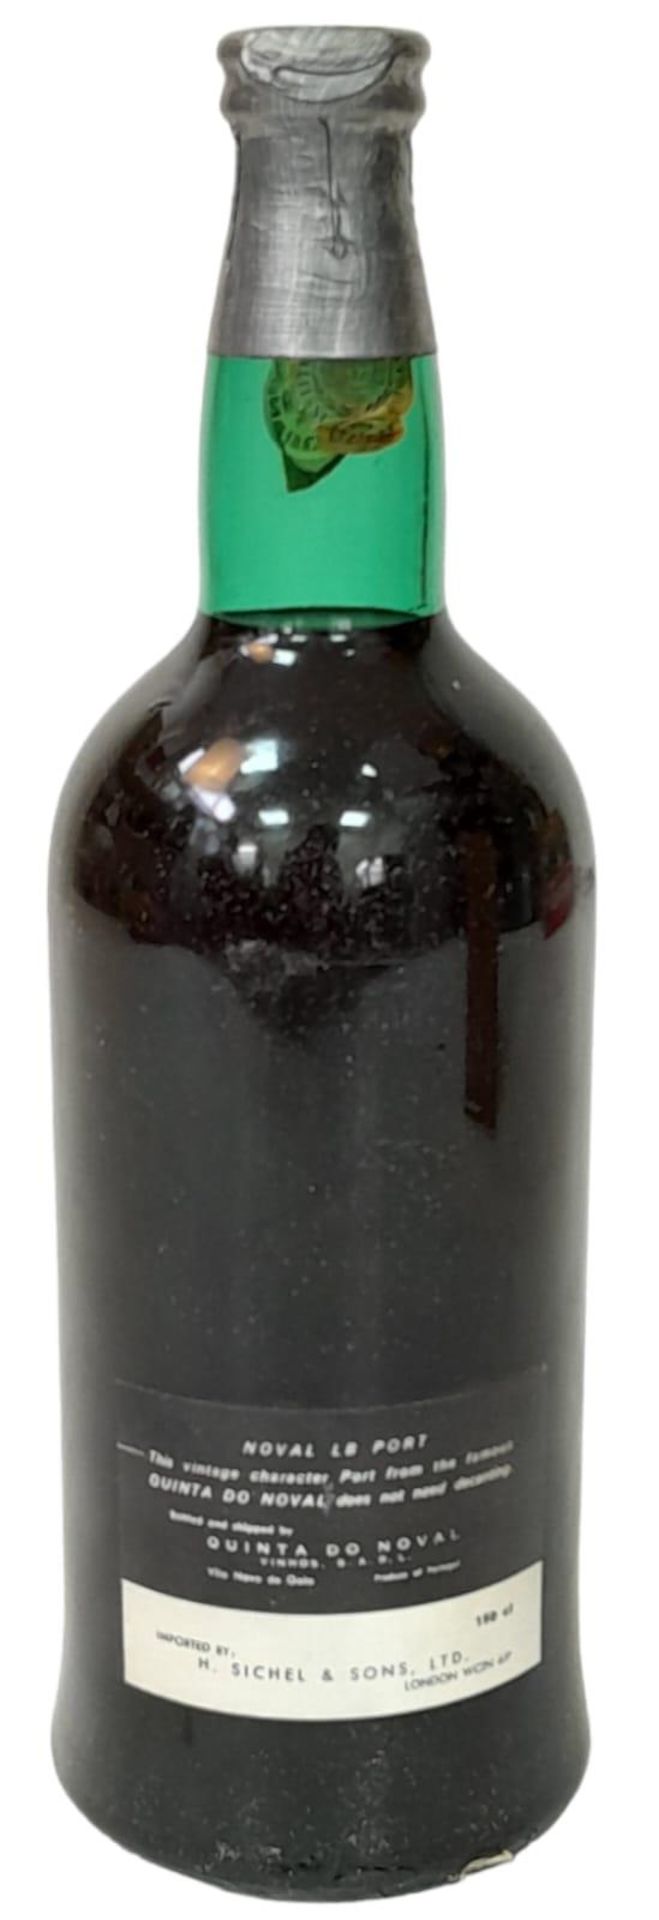 A Large Bottle of Noval LB Port in a Wooden Case - 150cl. - Image 3 of 7